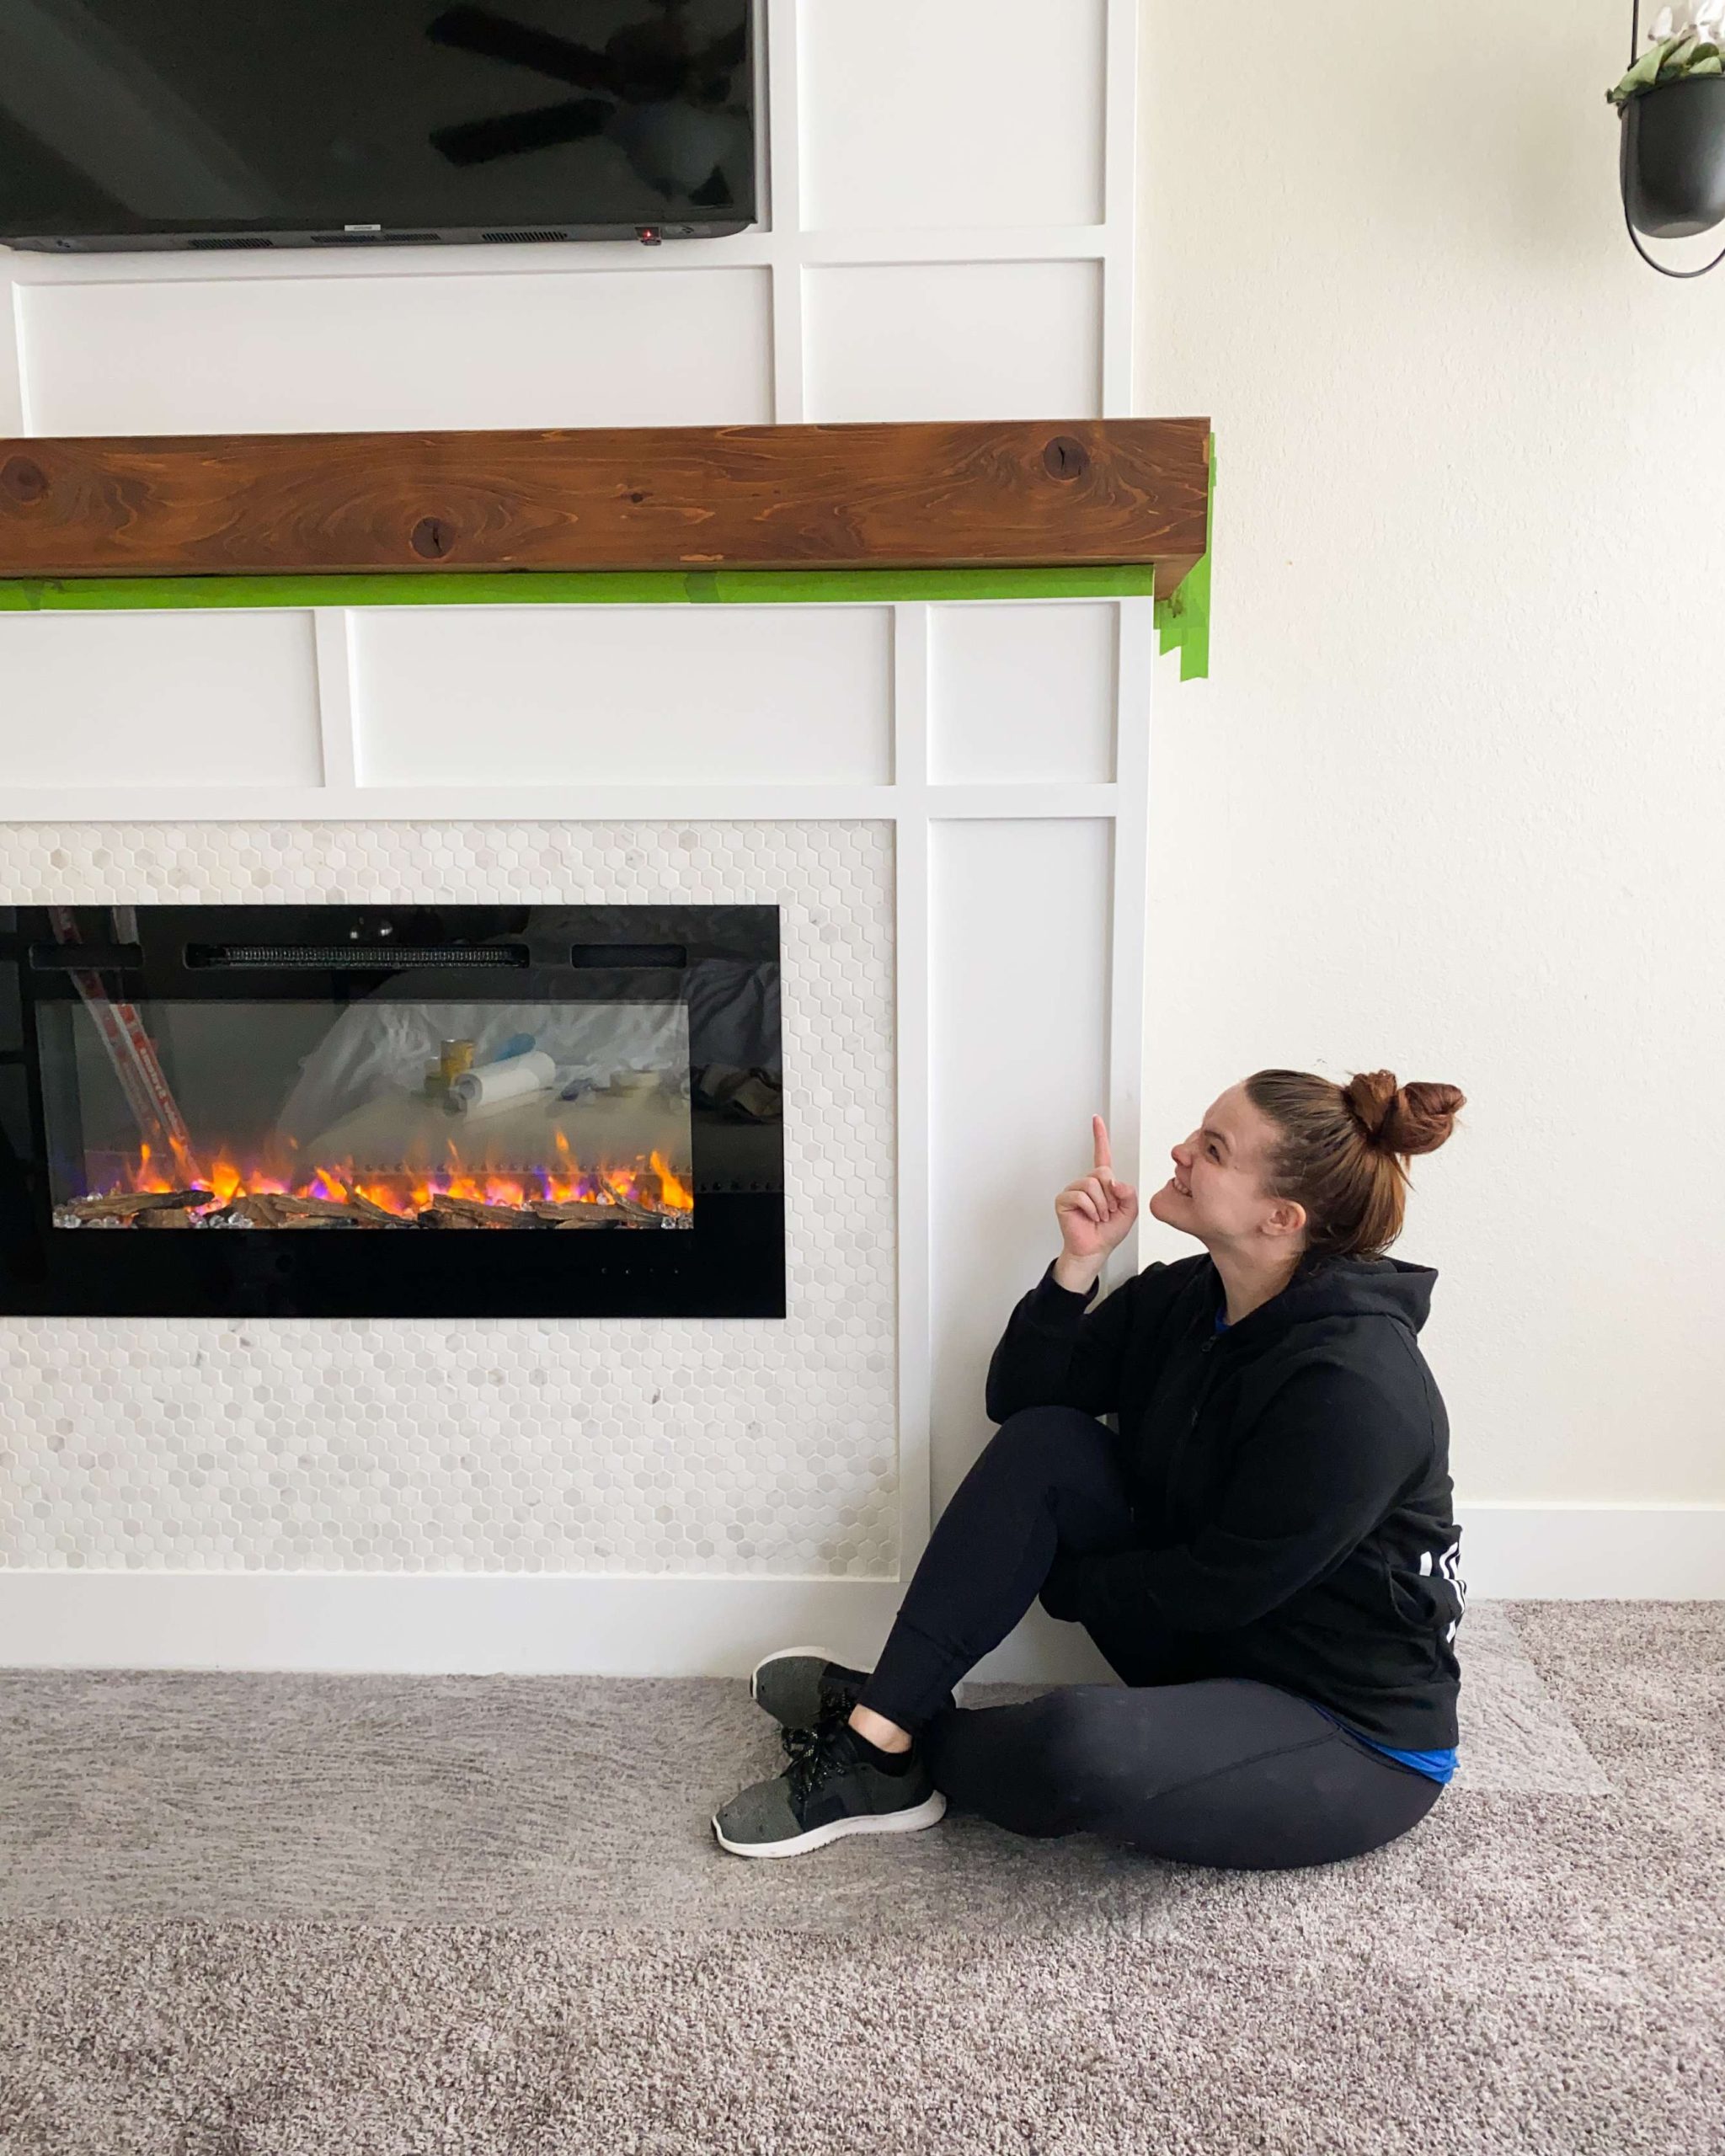 DIY Fireplace Mantle & Board and Batten - Olivegrey Avenue